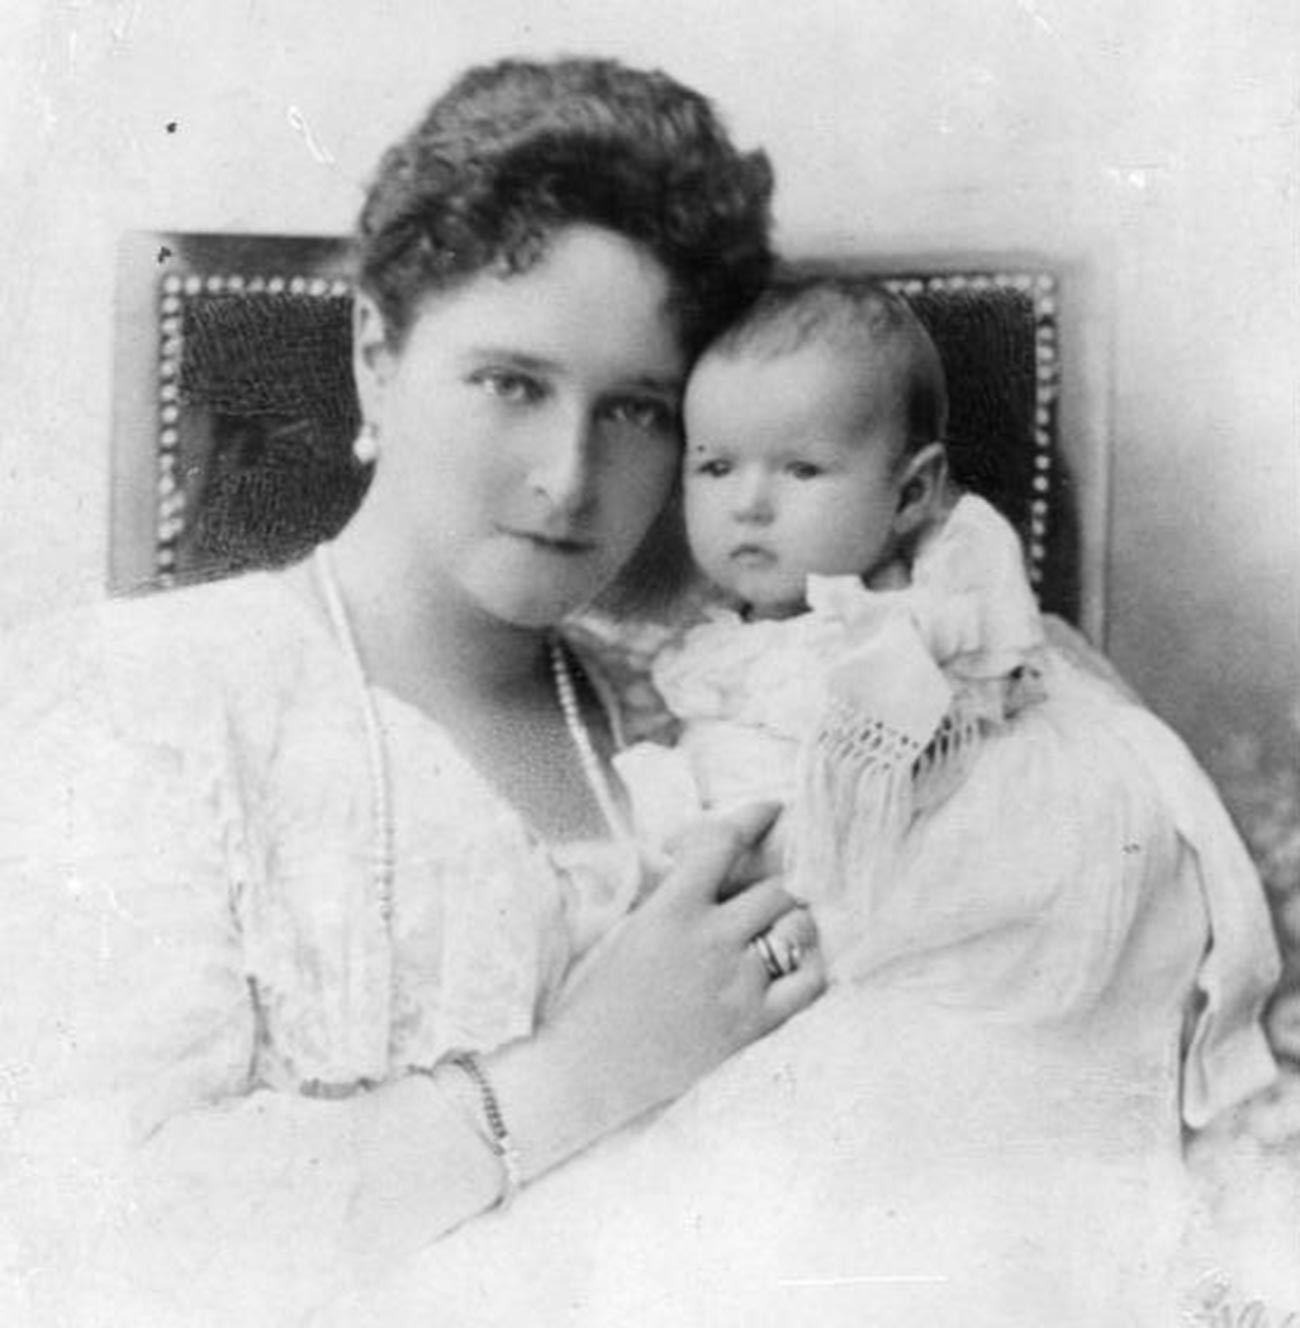 Zarin Alexandra Fjodorowna mit Tochter Anastasia Nikolajewna Romanowa